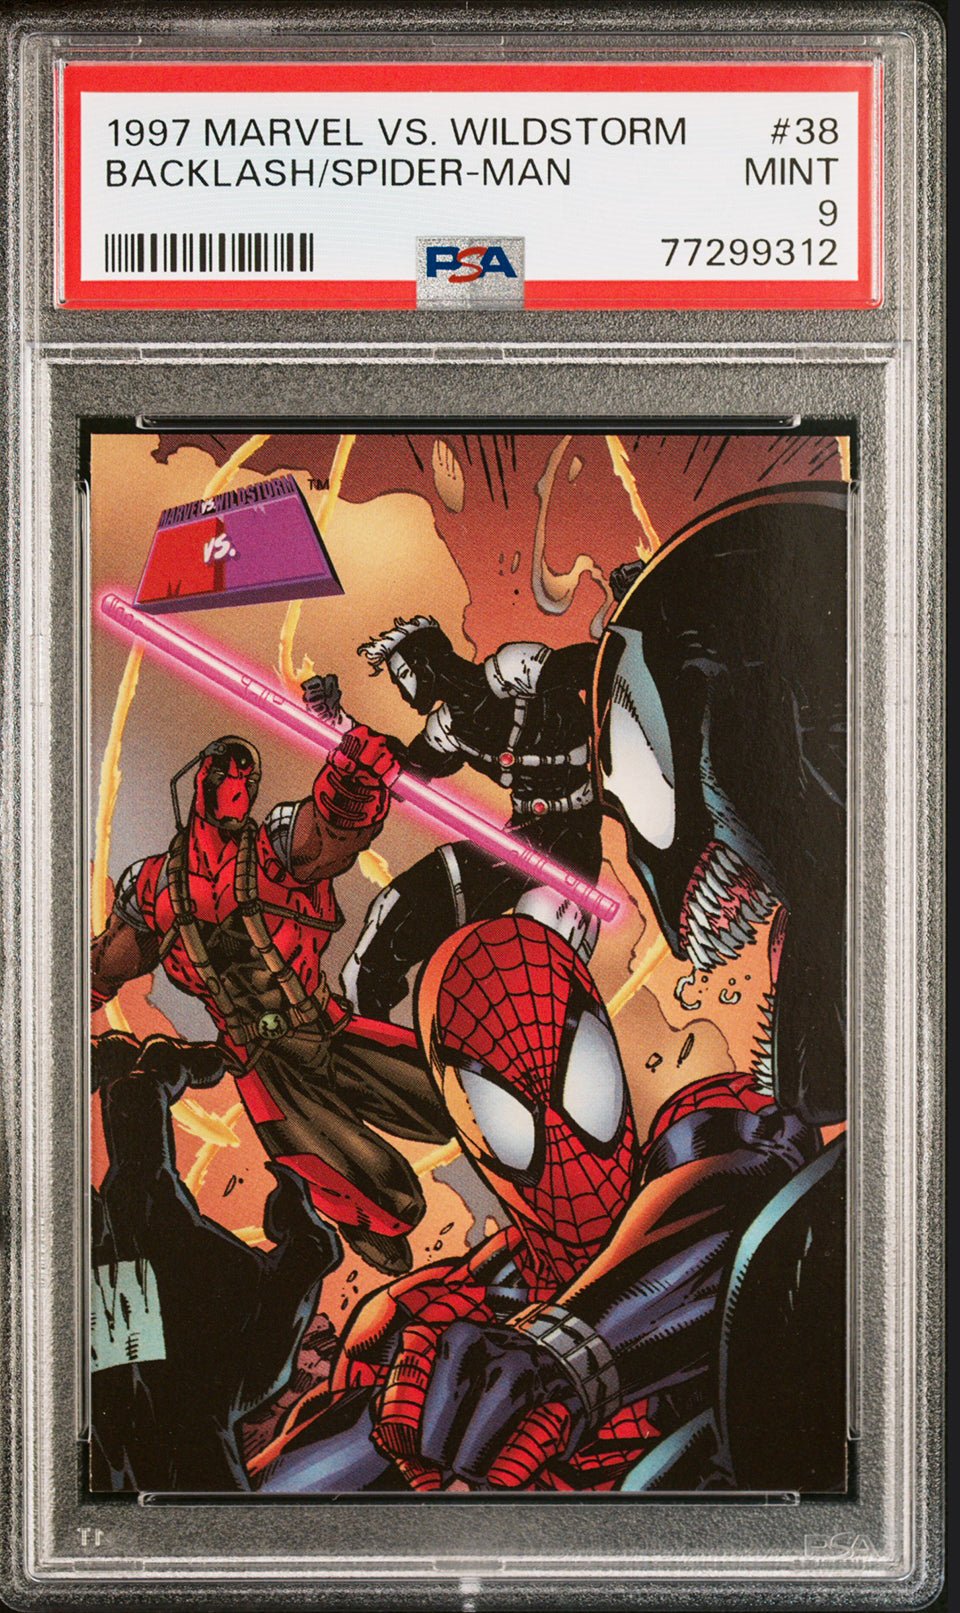 BACKLASH / SPIDER-MAN Venom PSA 9 1997 Marvel vs. Wildstorm #38 Marvel Base Graded Cards - Hobby Gems